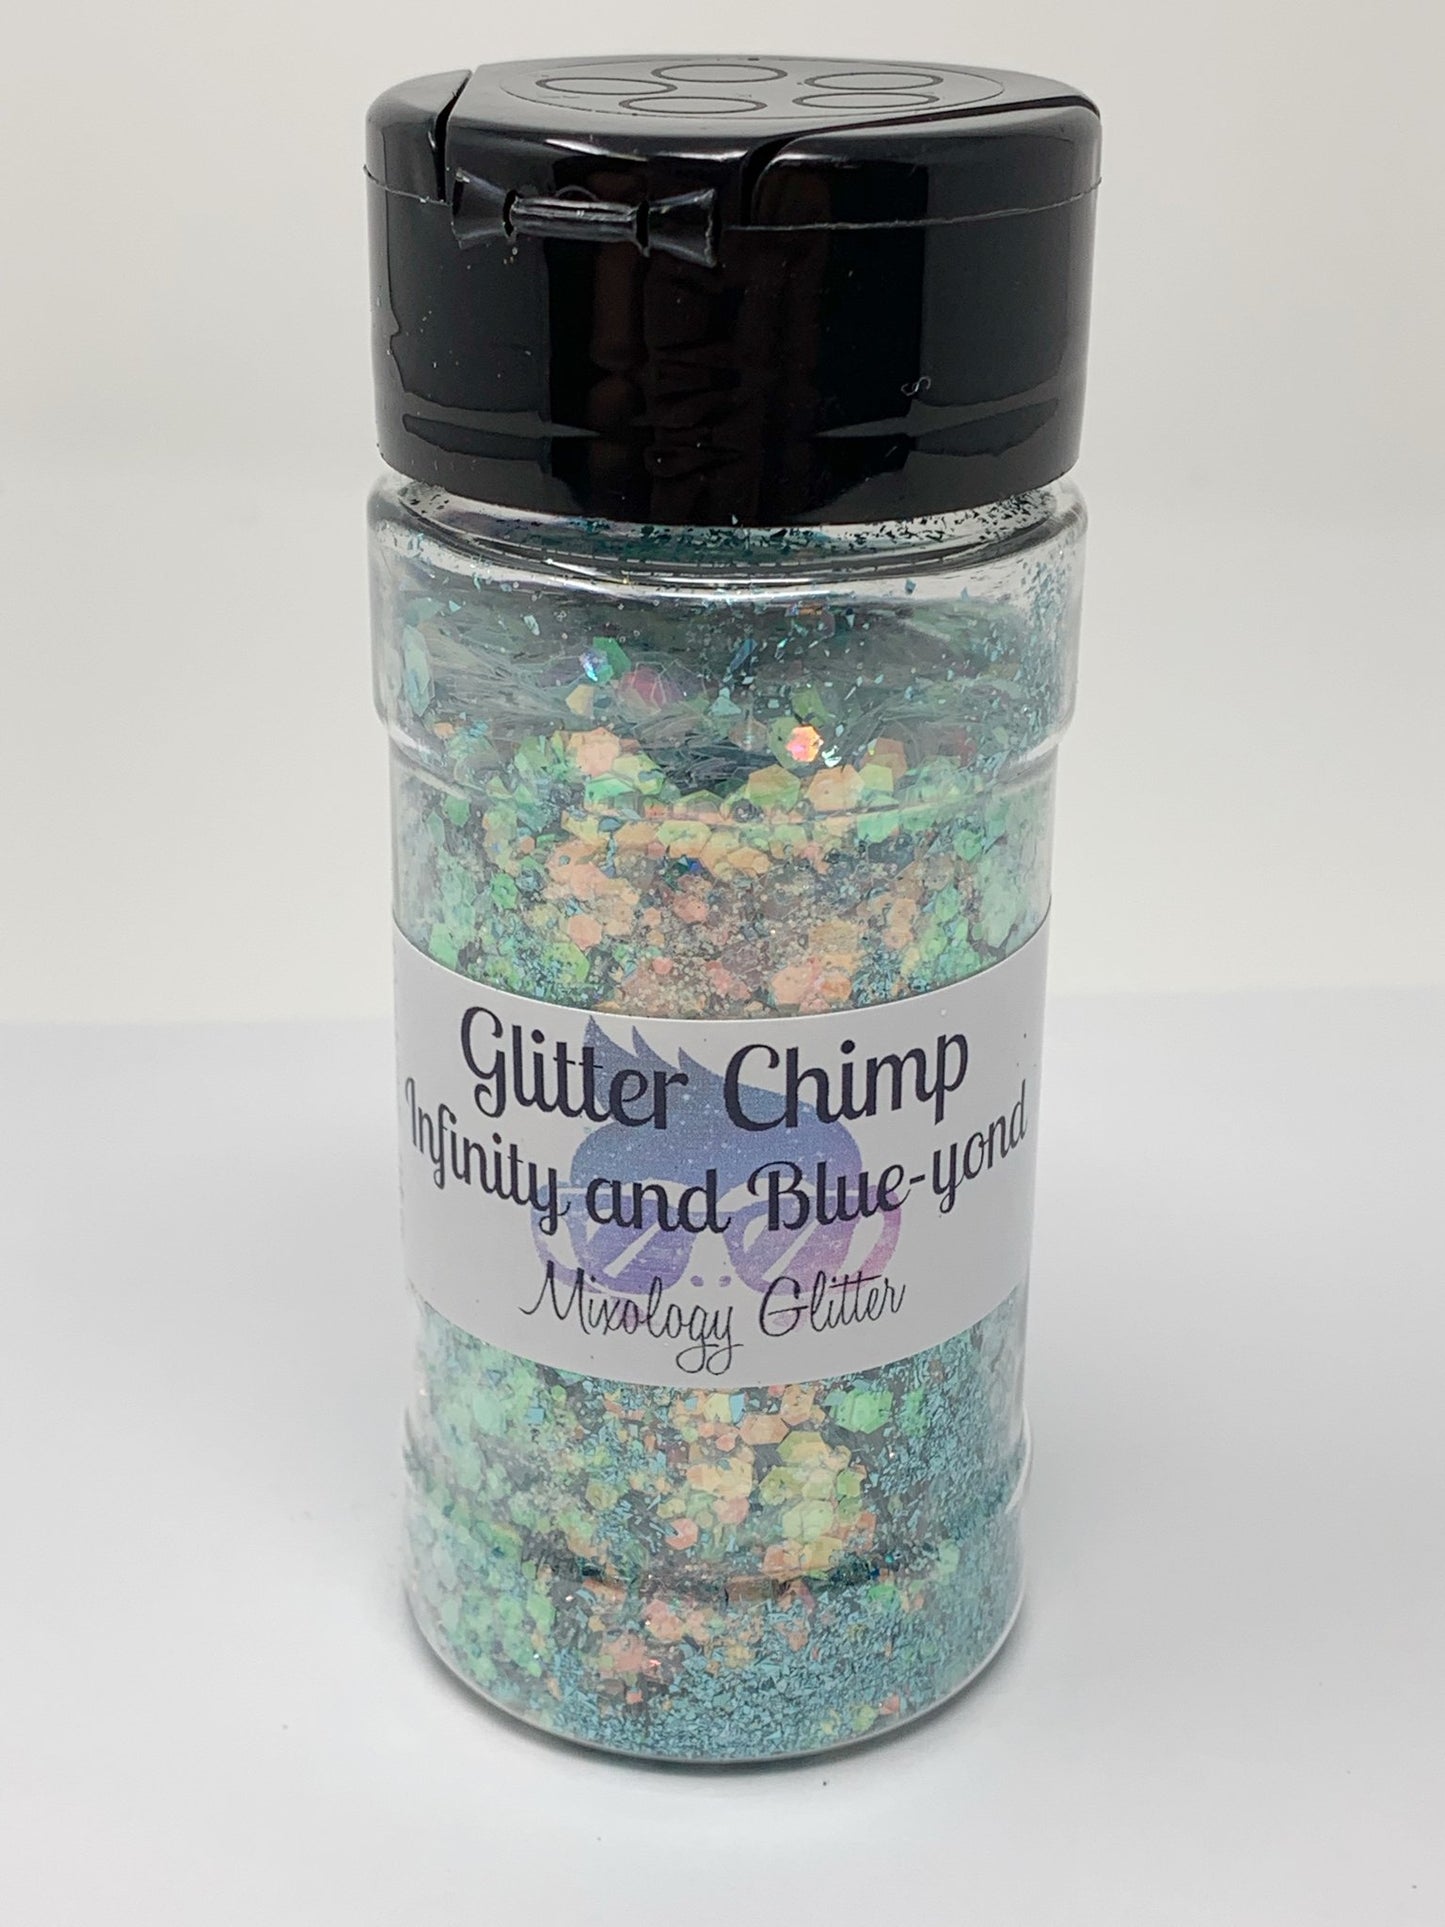 Glitter Chimp  Infinity And Blue-Yond Mixology Glitter